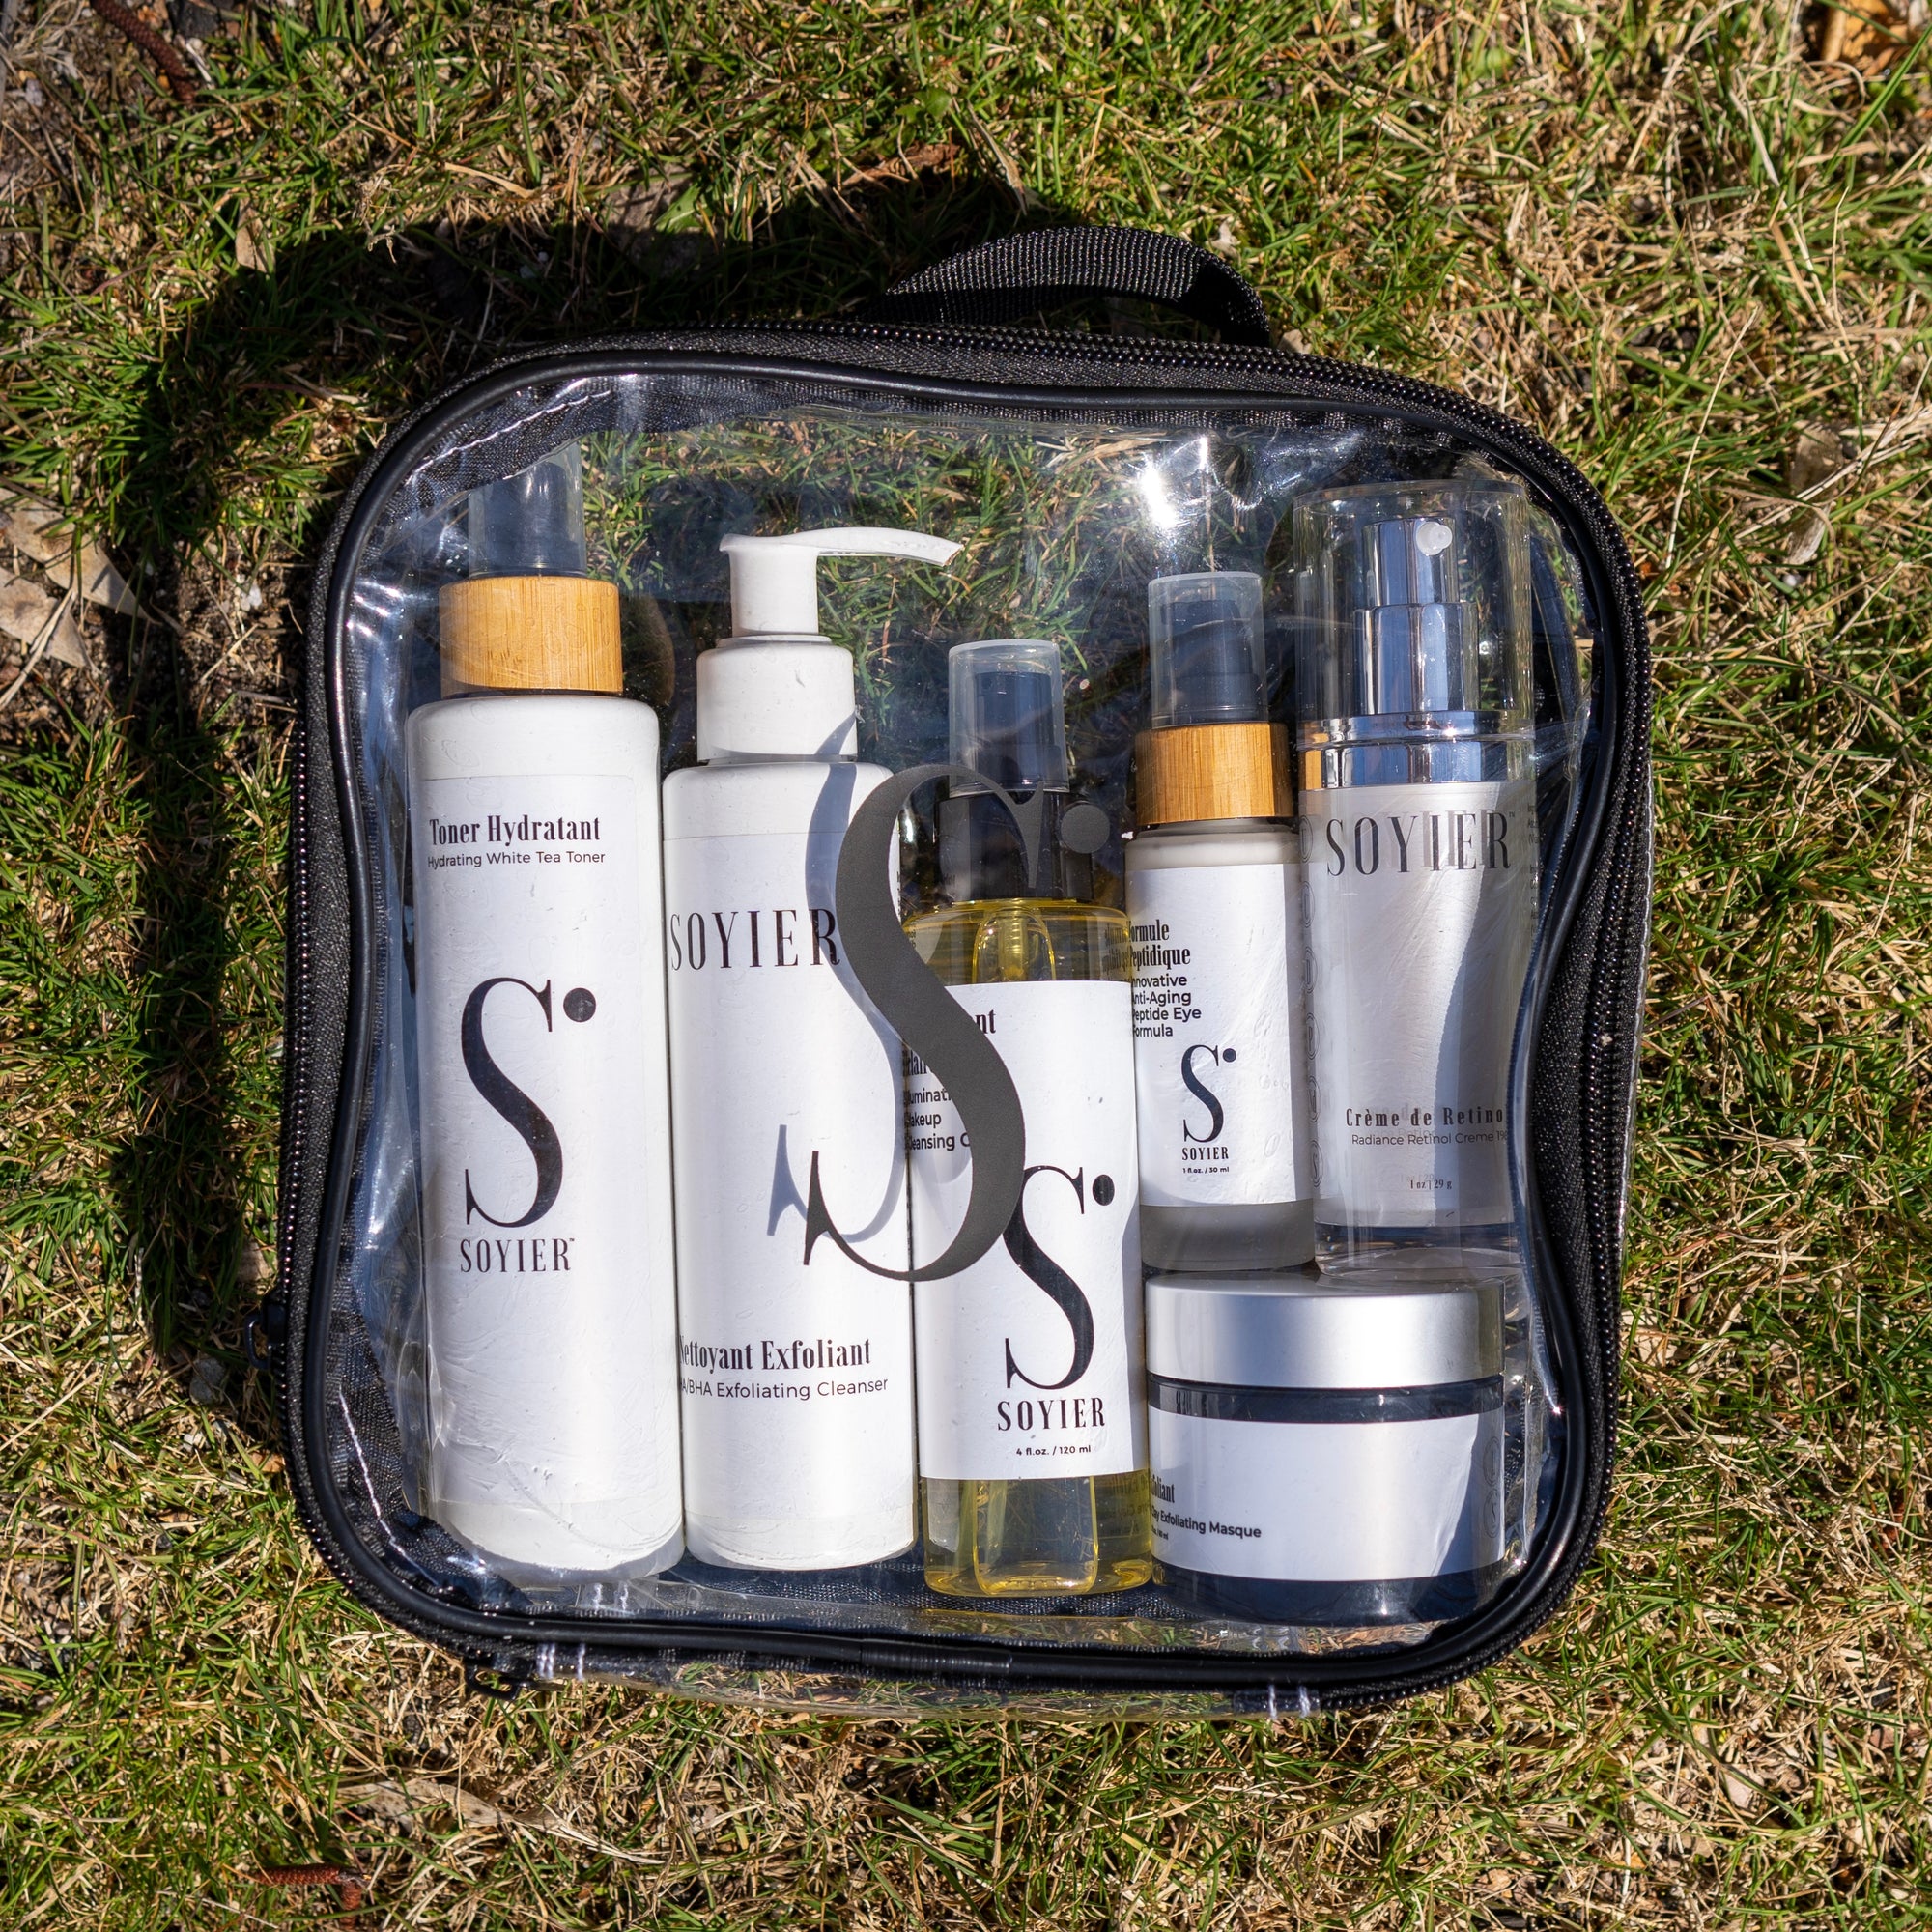 Soyier Makeup/Skincare Travel Bag